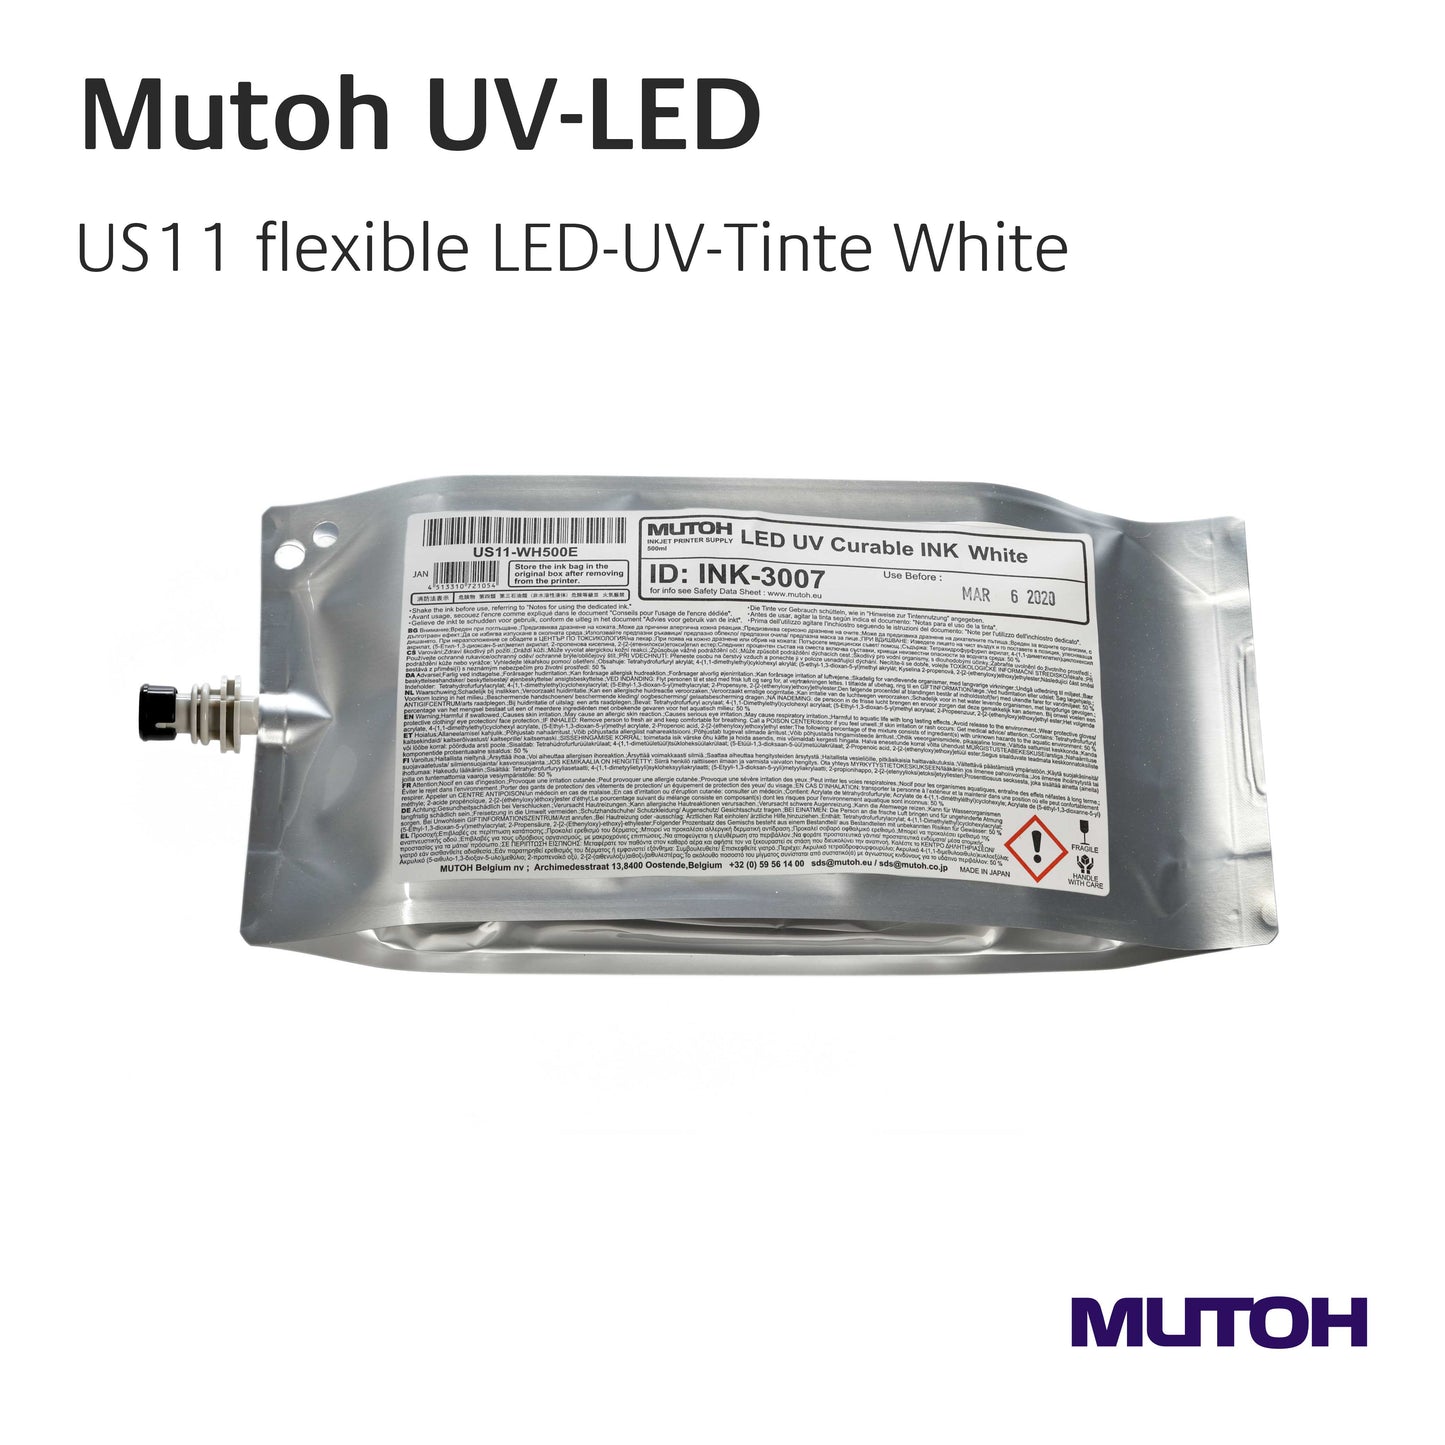 Mutoh - US11 flexible LED-UV-Tinten